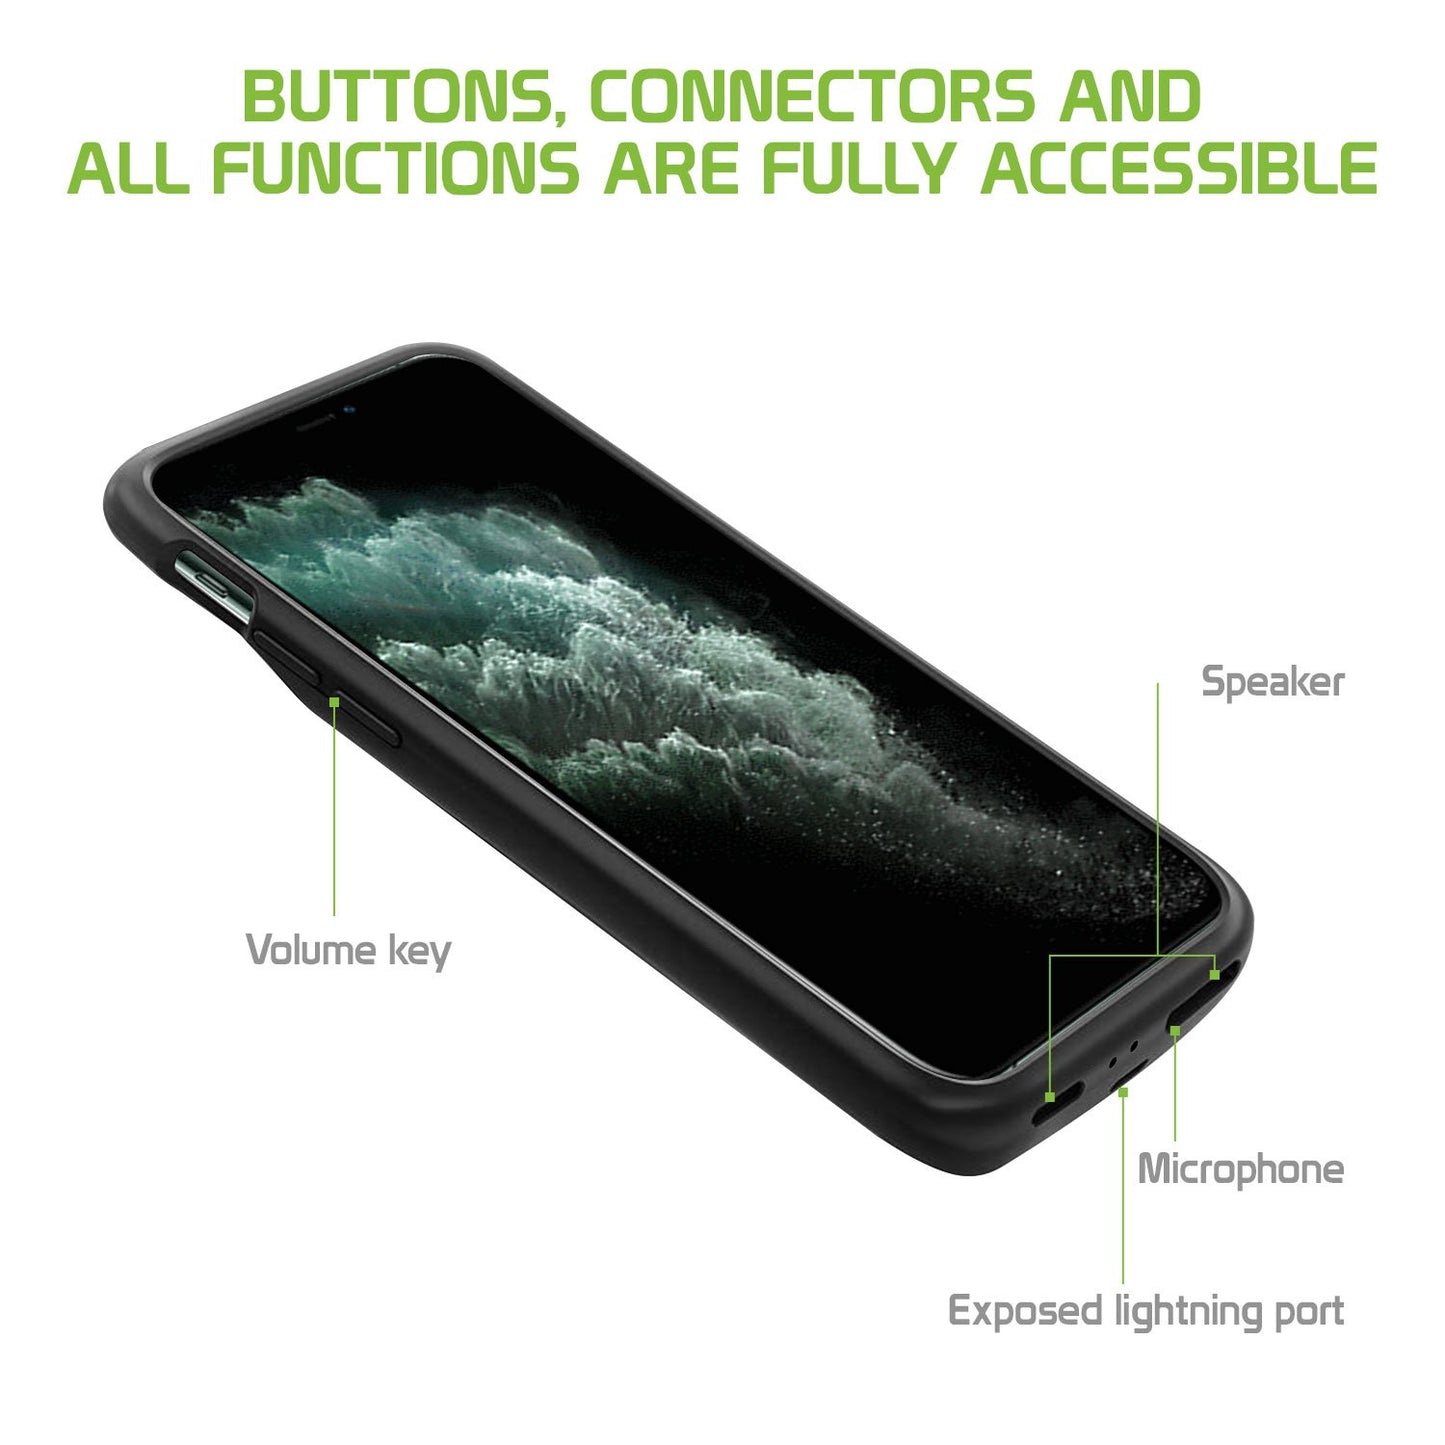 BIPH11PMBK - Cellet Apple iPhone 11 Pro Max Battery Case, Rechargeable External Power Case (iPhone 11 Pro Max)